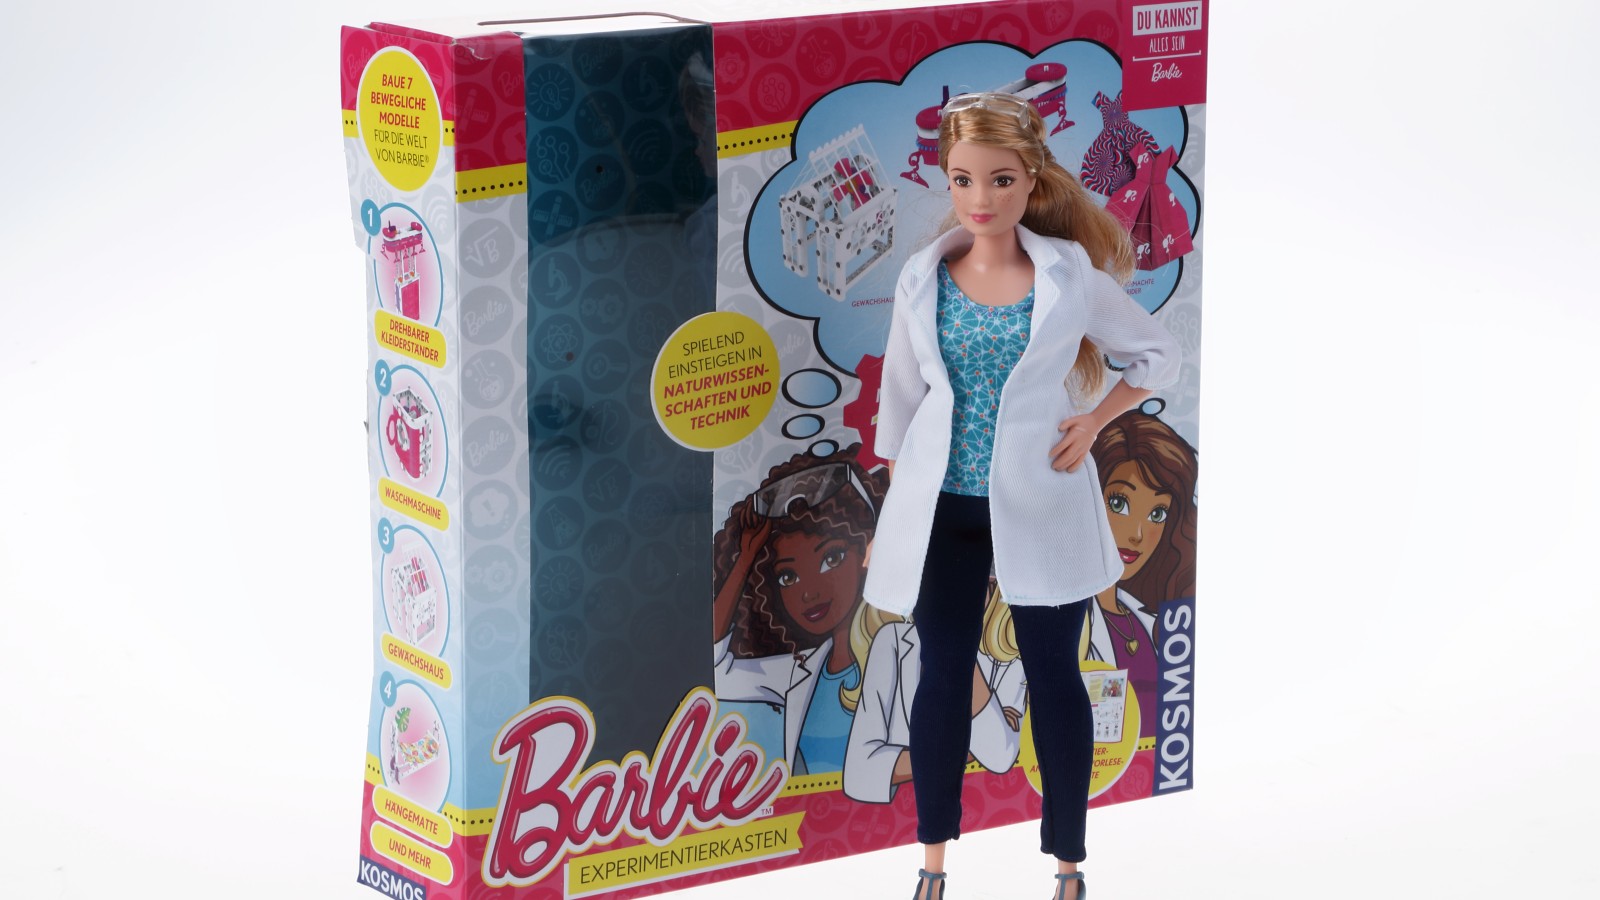 Barbie experimentiert mit Stereotypen